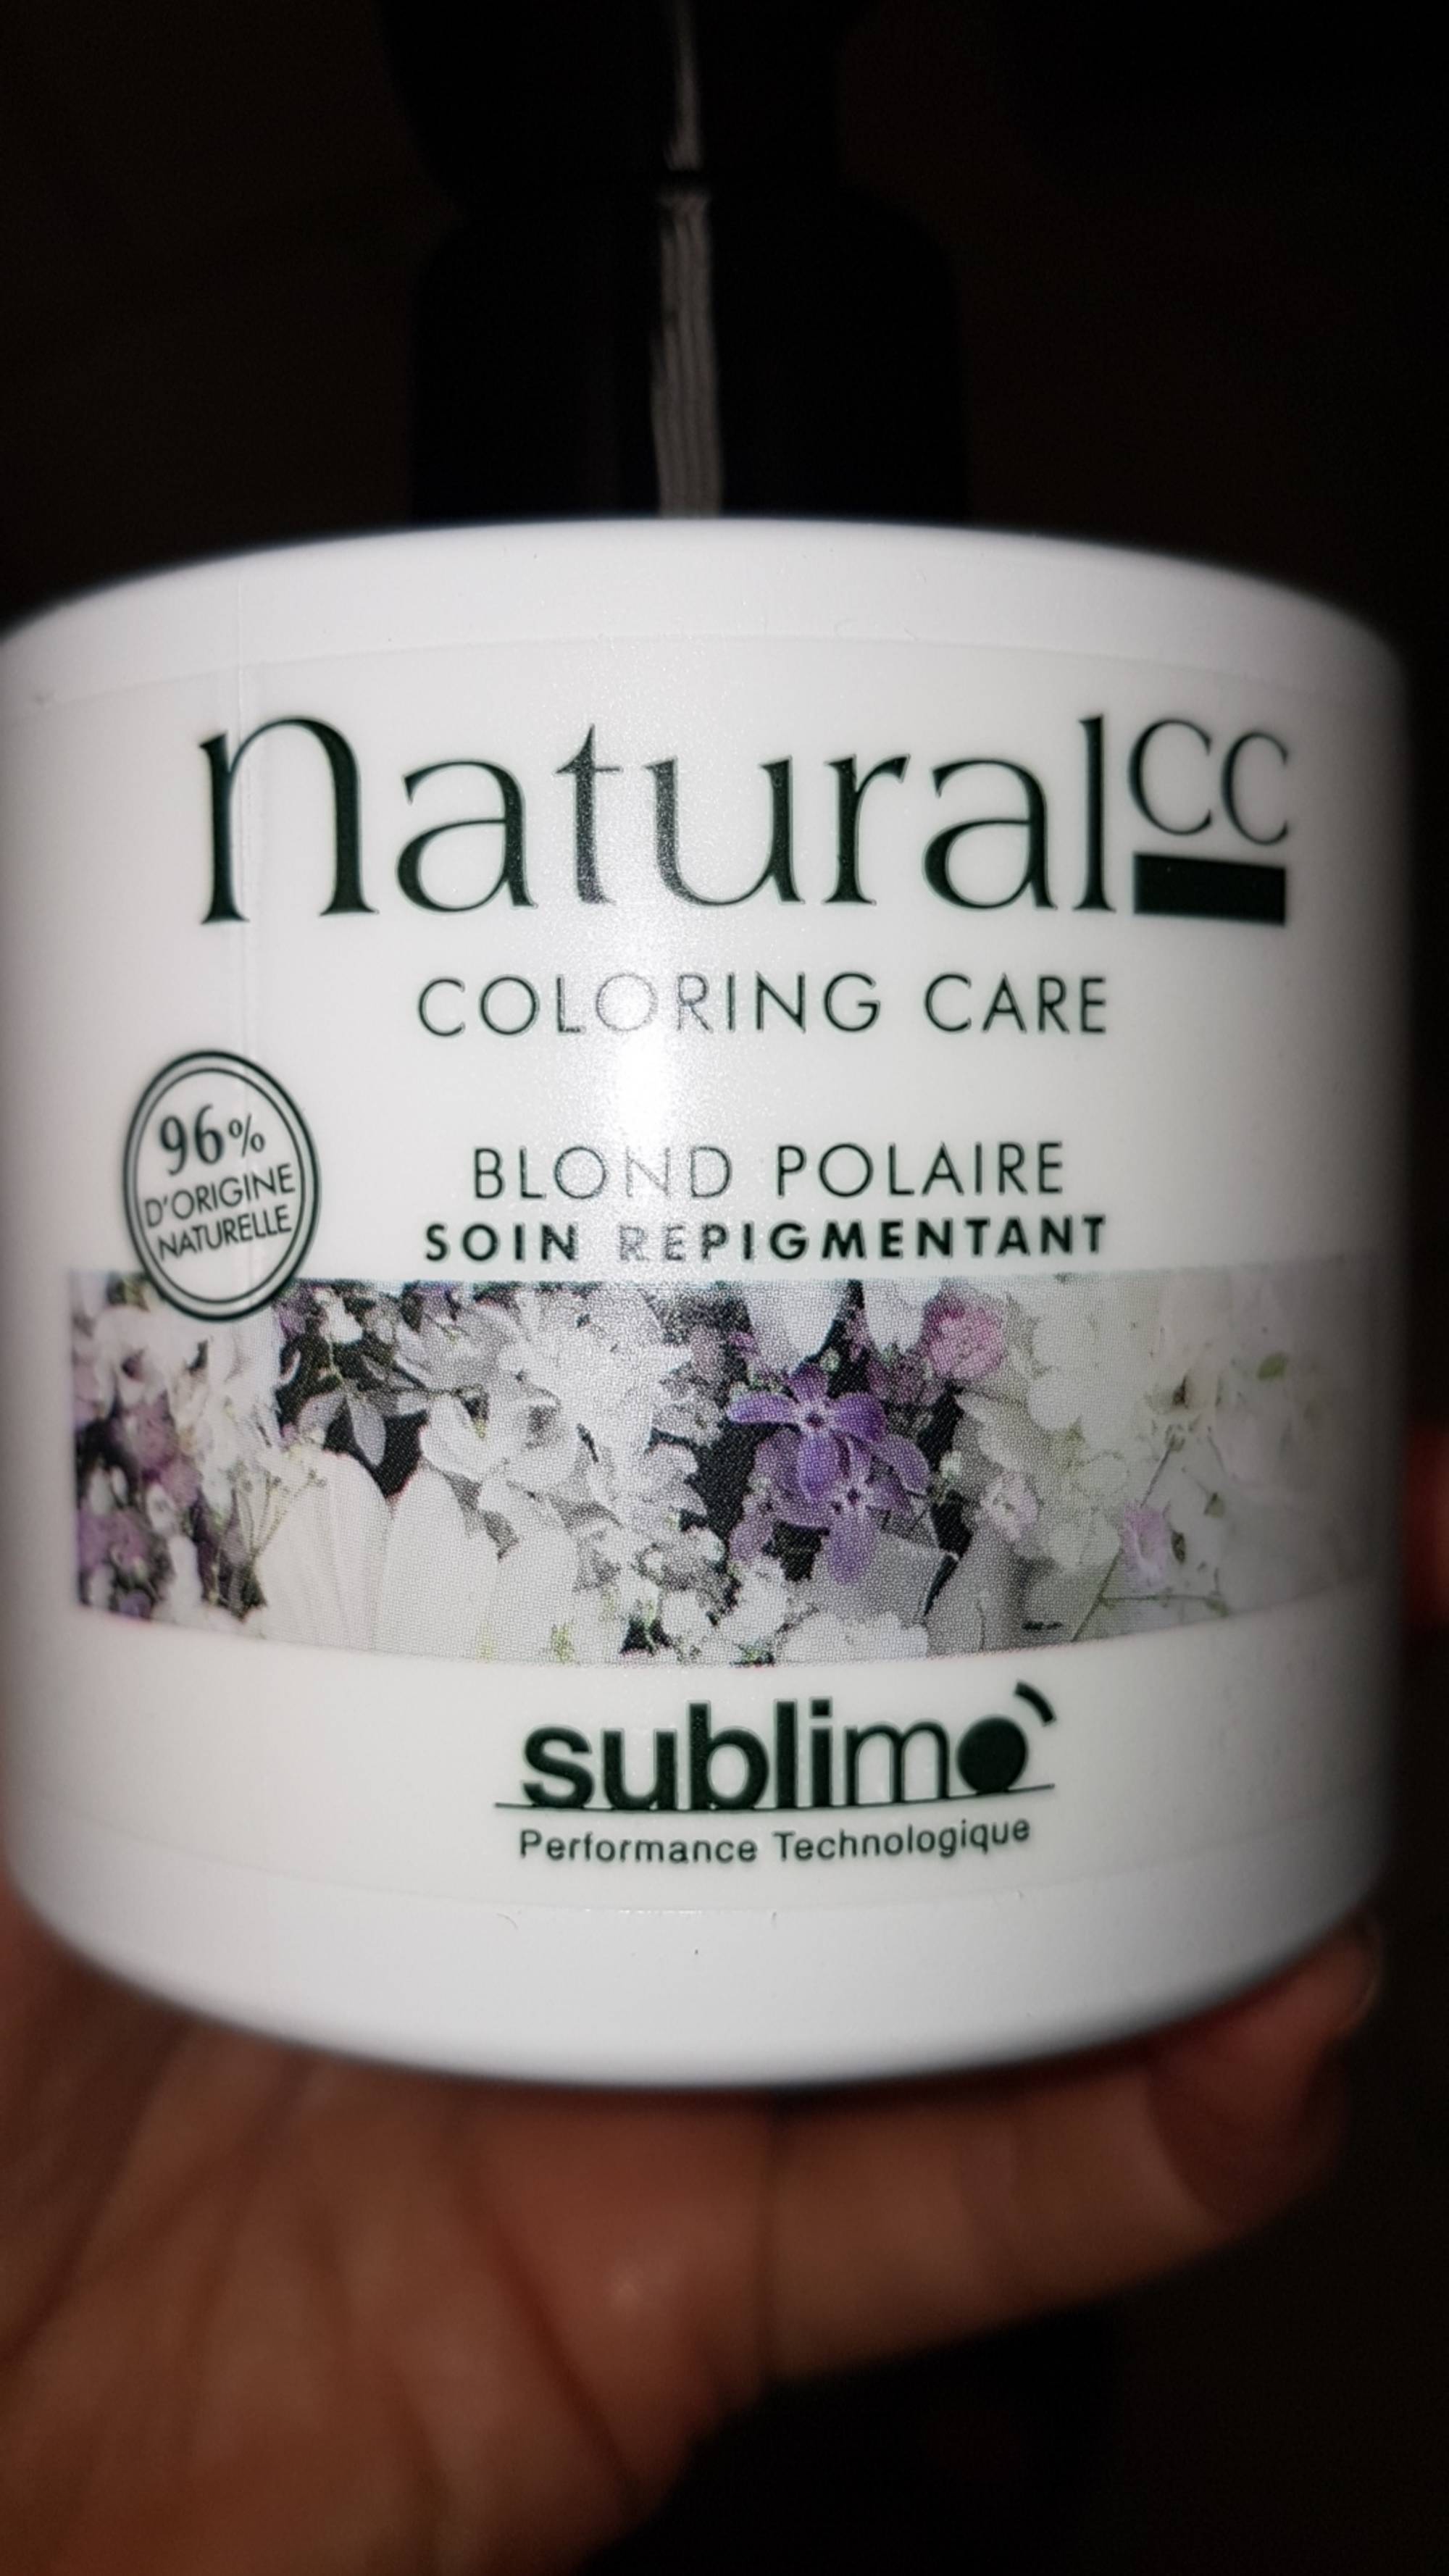 SUBLIMO - Natural cc - Blond polaire - Soin repigmentant